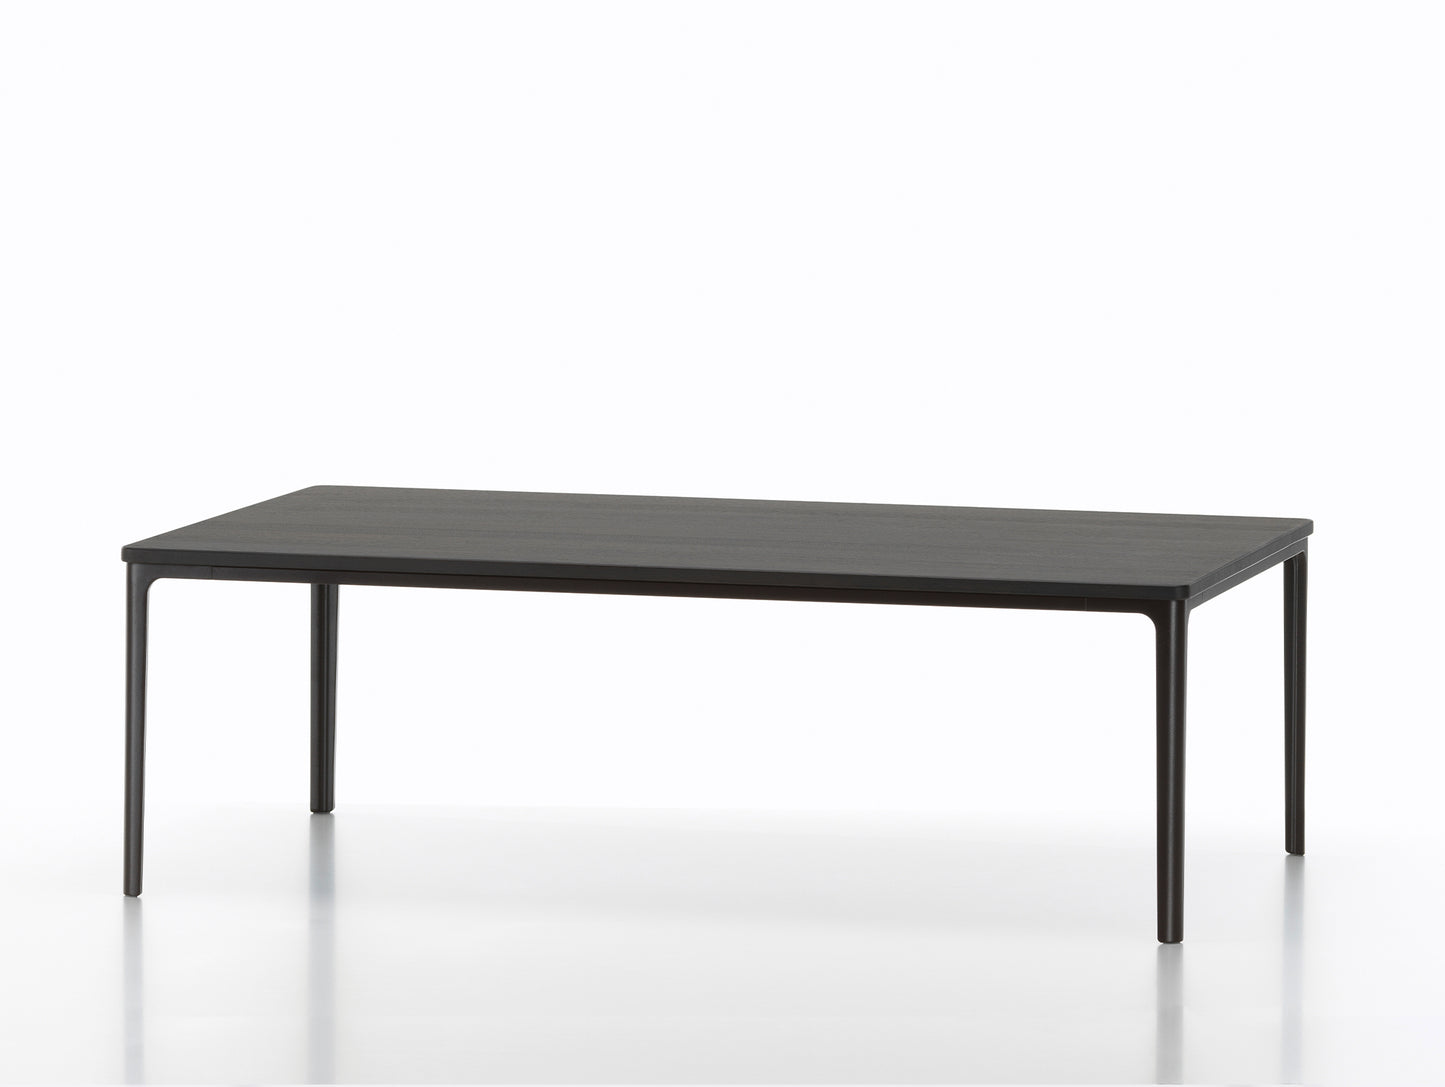 Plate Coffee Table by Vitra - Width: 113 cm / Depth: 71 cm, Basic Dark Aluminium Base, Dark Oak Tabletop